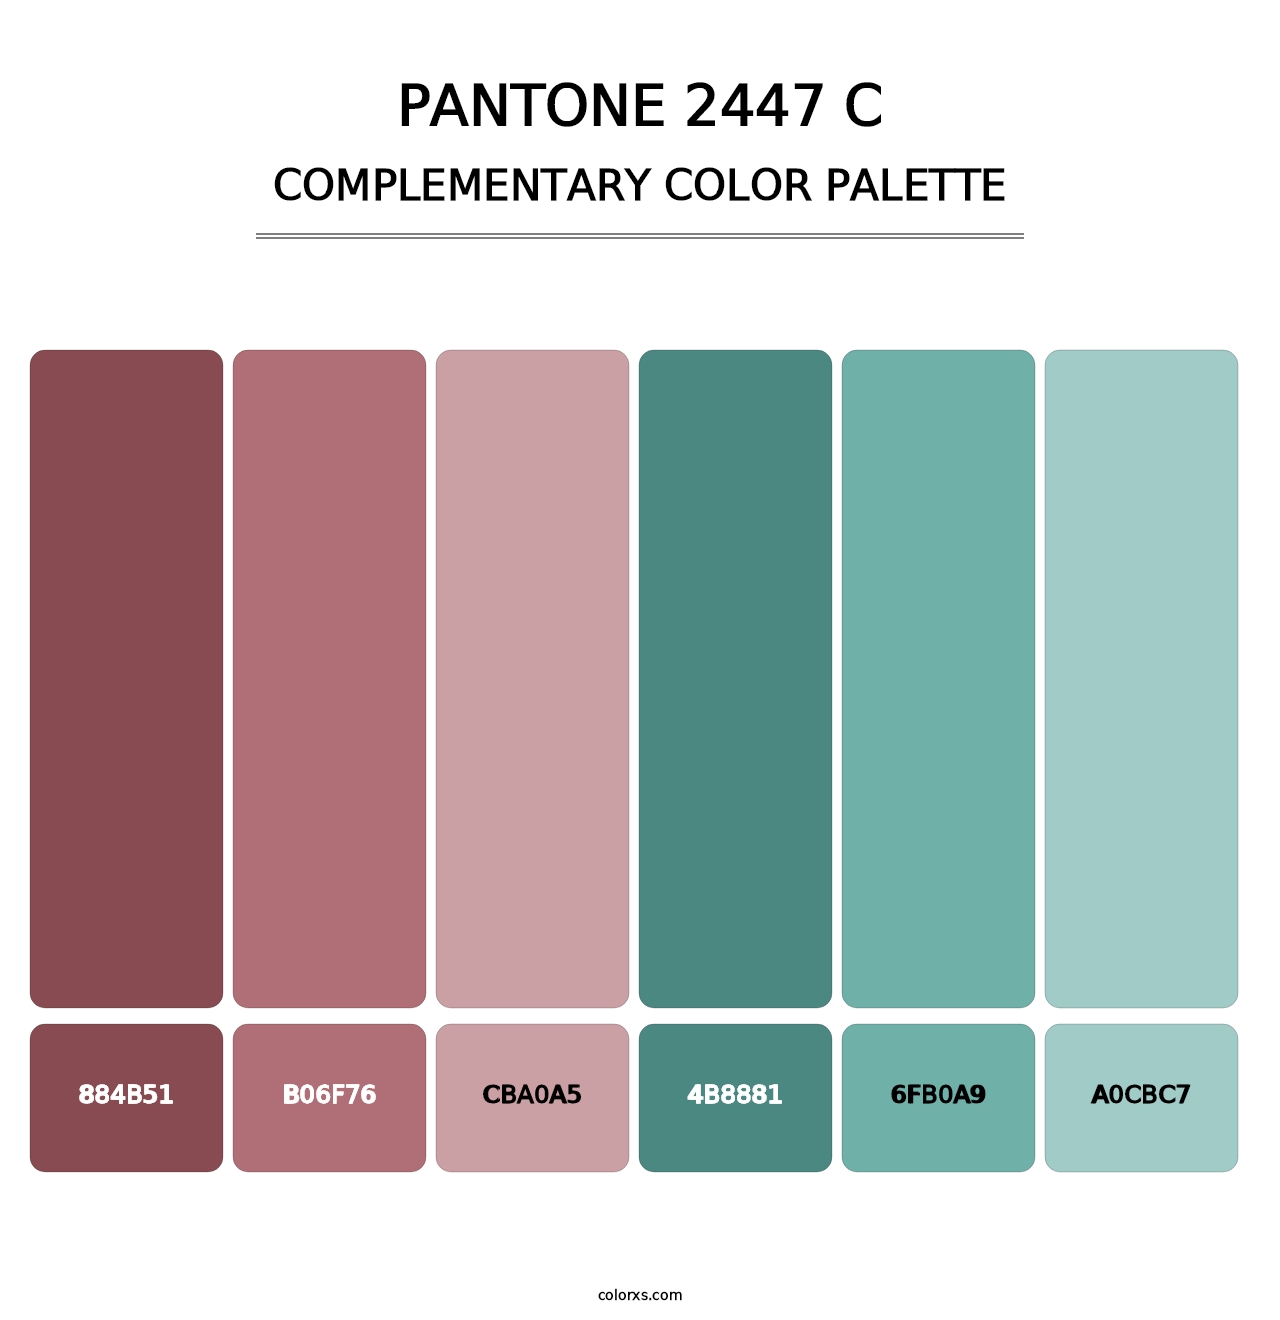 PANTONE 2447 C - Complementary Color Palette